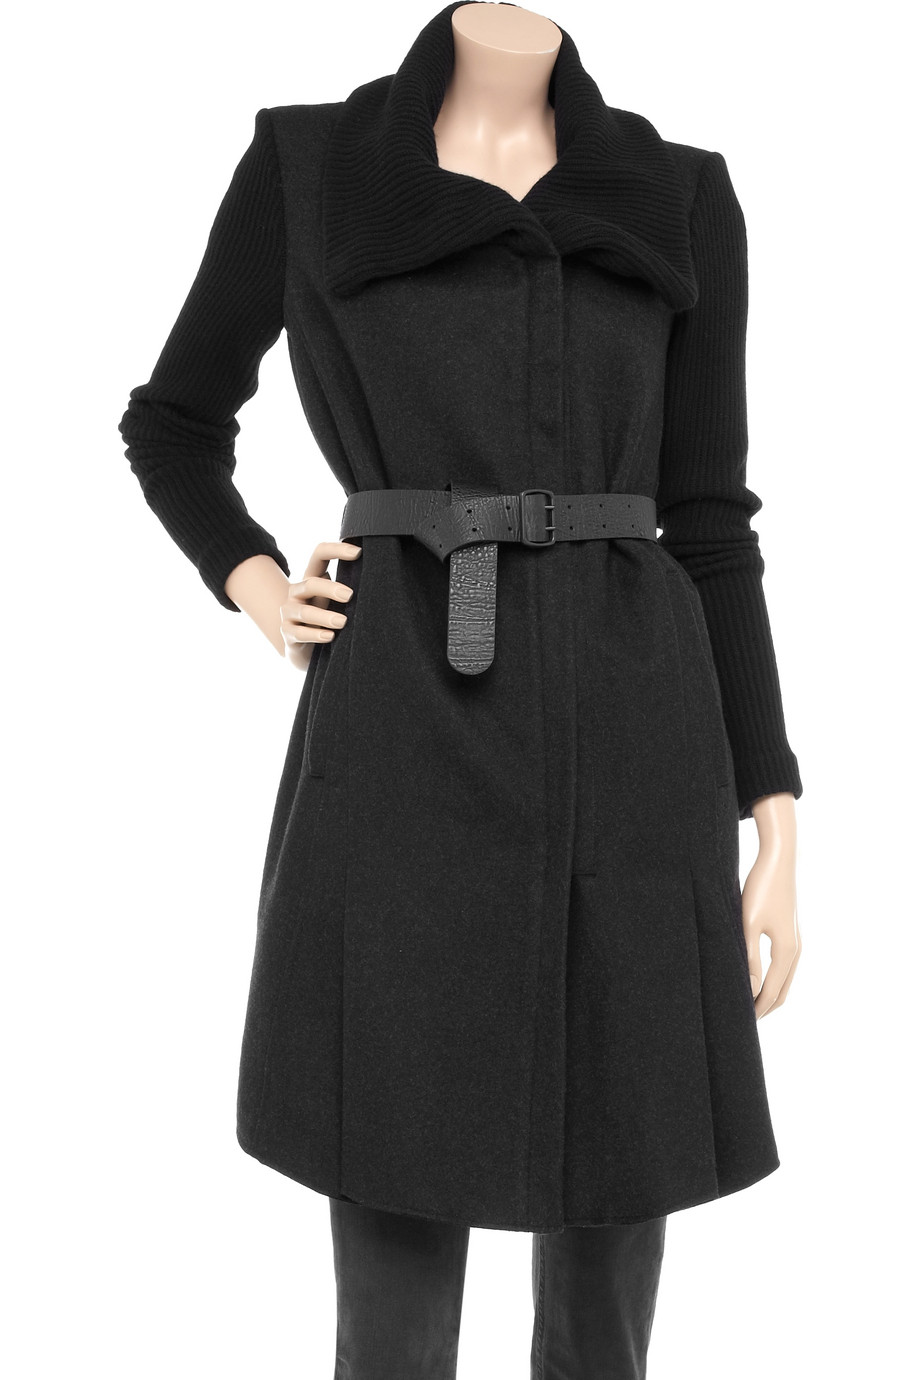 Lyst - Helmut Lang Asymmetric Wool-blend Coat in Black